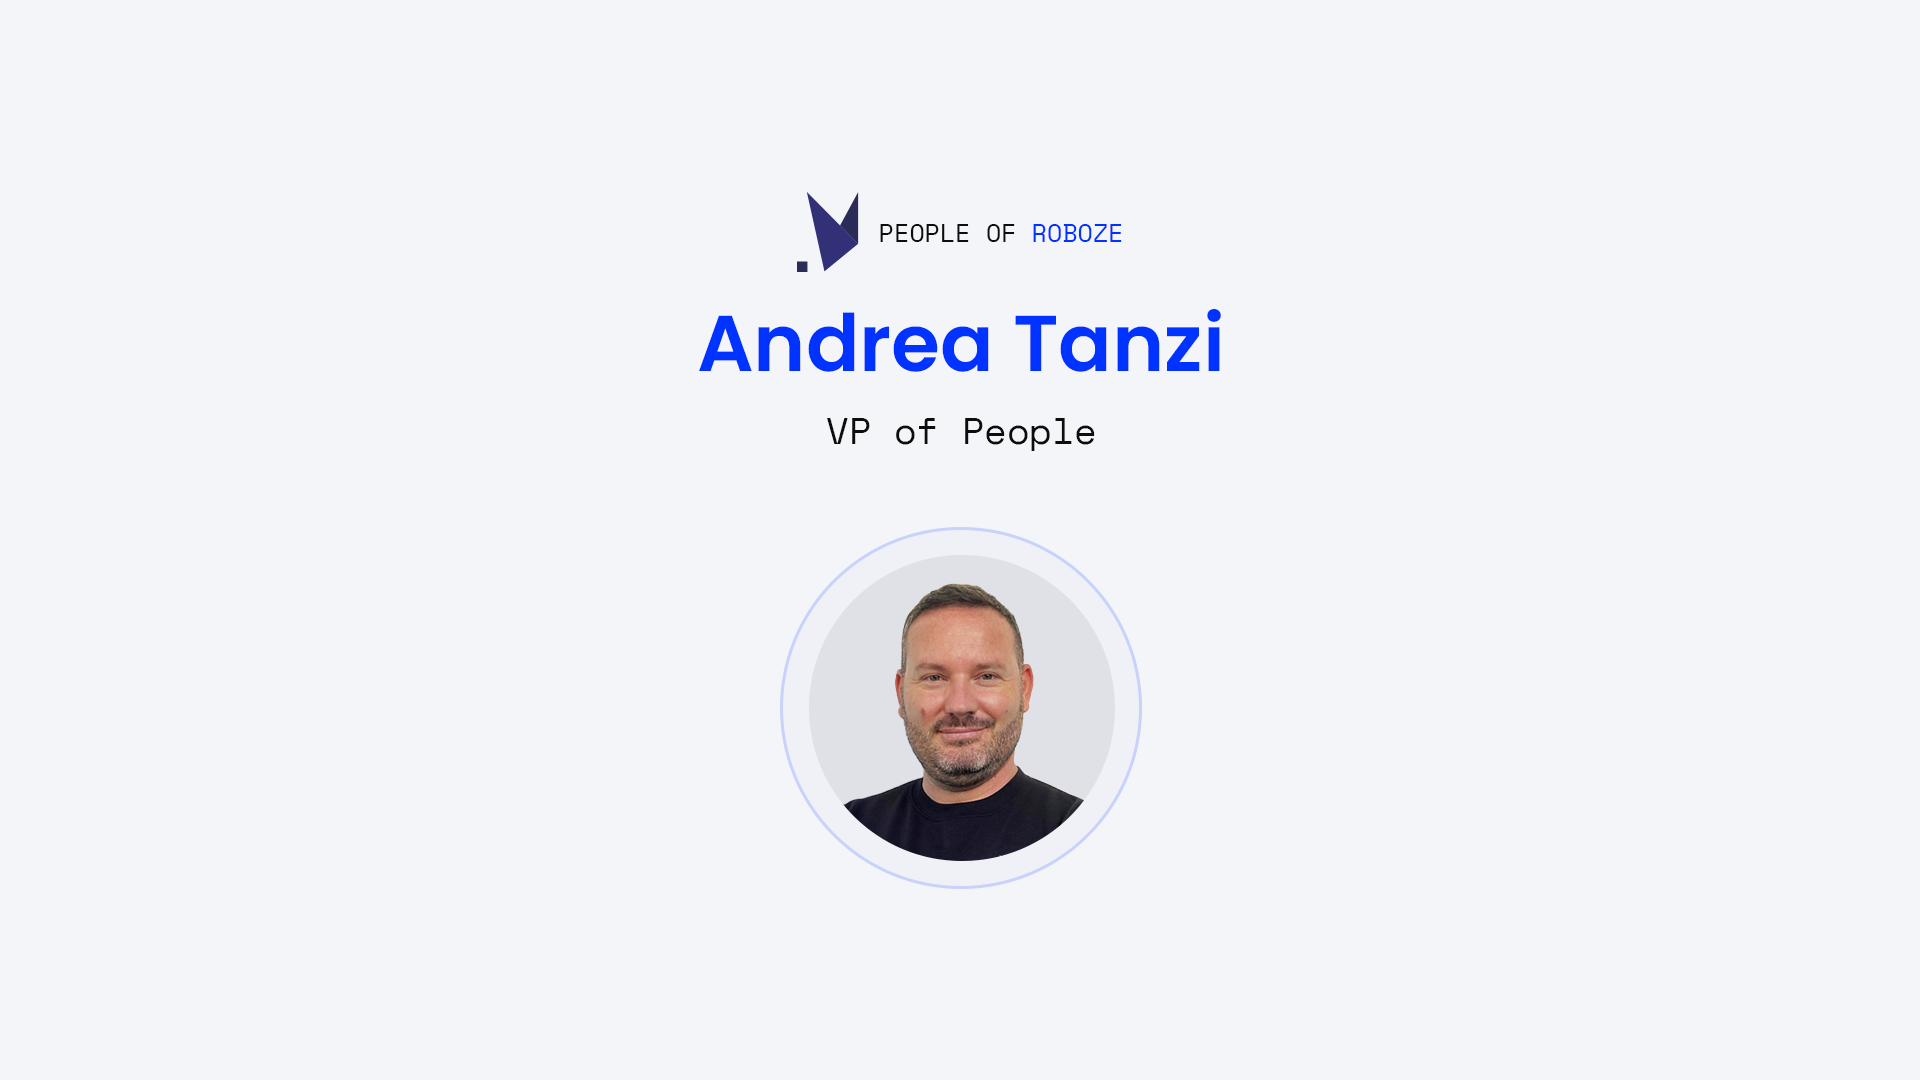 Andrea Tanzi is Roboze's new VP of People